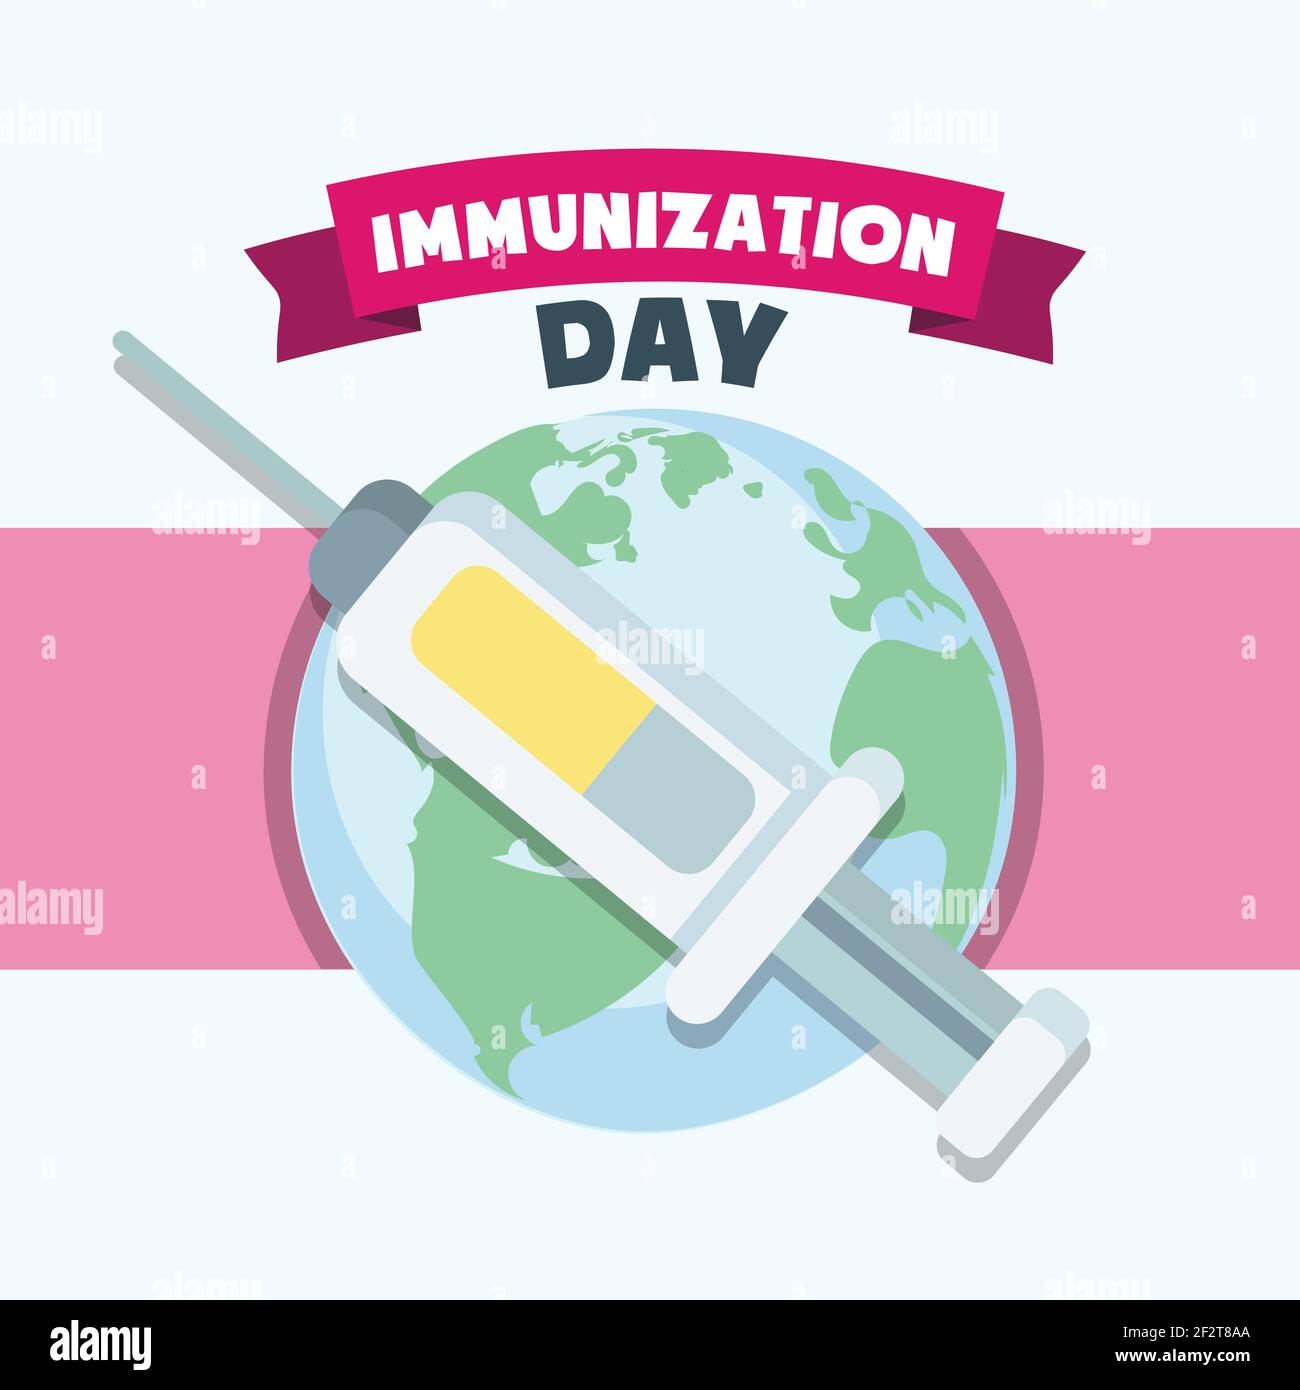 Immunization Day poster, world vaccination illustration banner vector Stock Vector